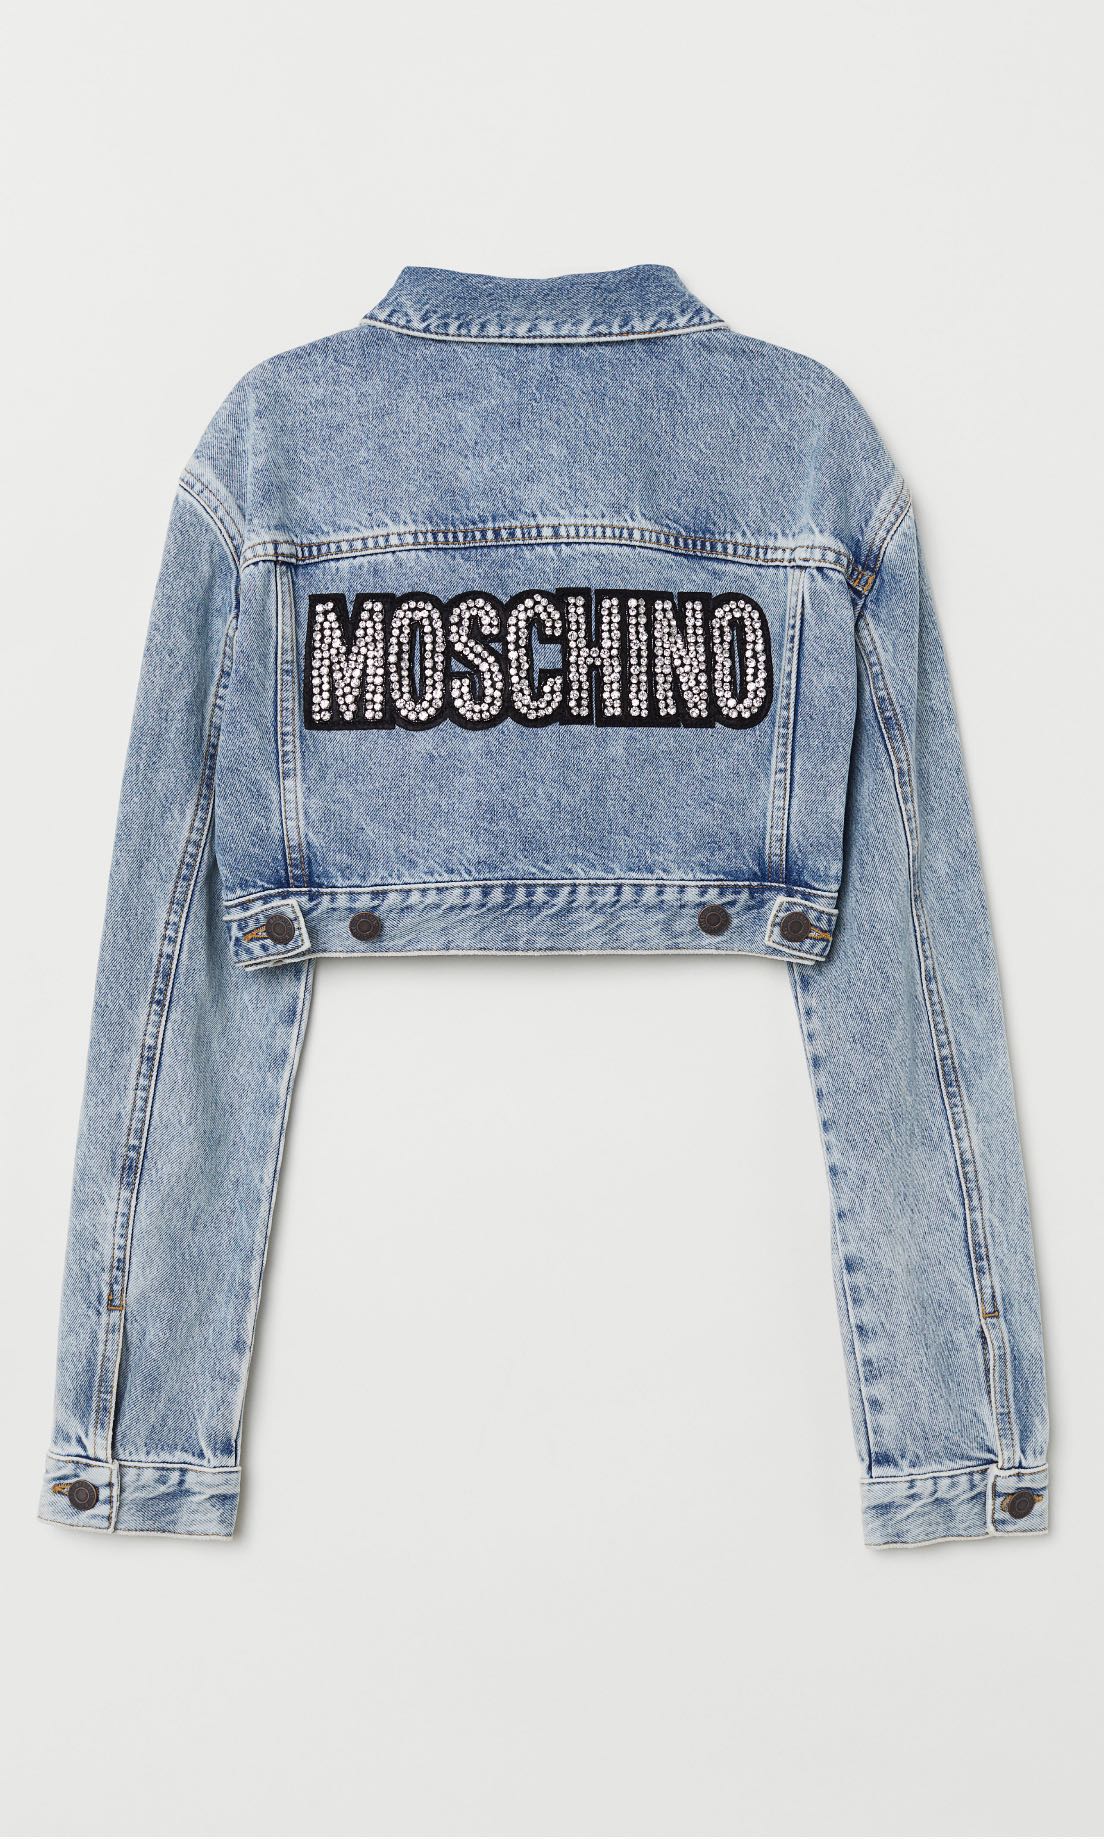 moschino cropped denim jacket